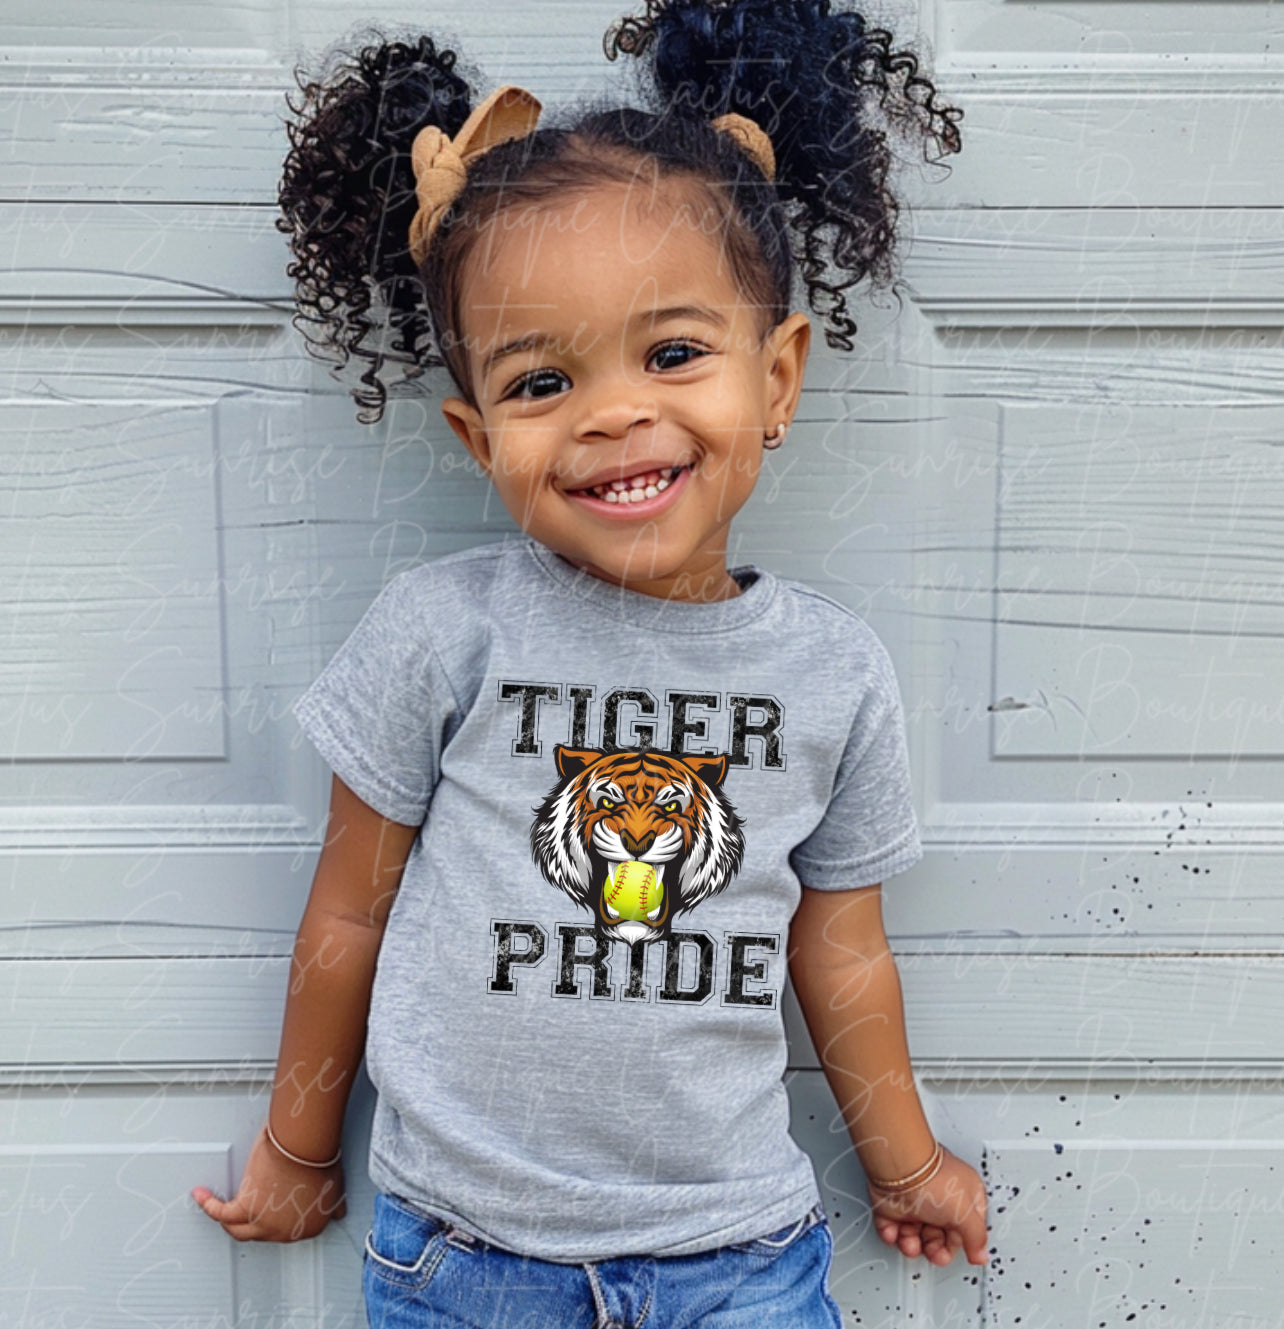 Tiger Pride Softball Youth/Toddler/Onesie Tee